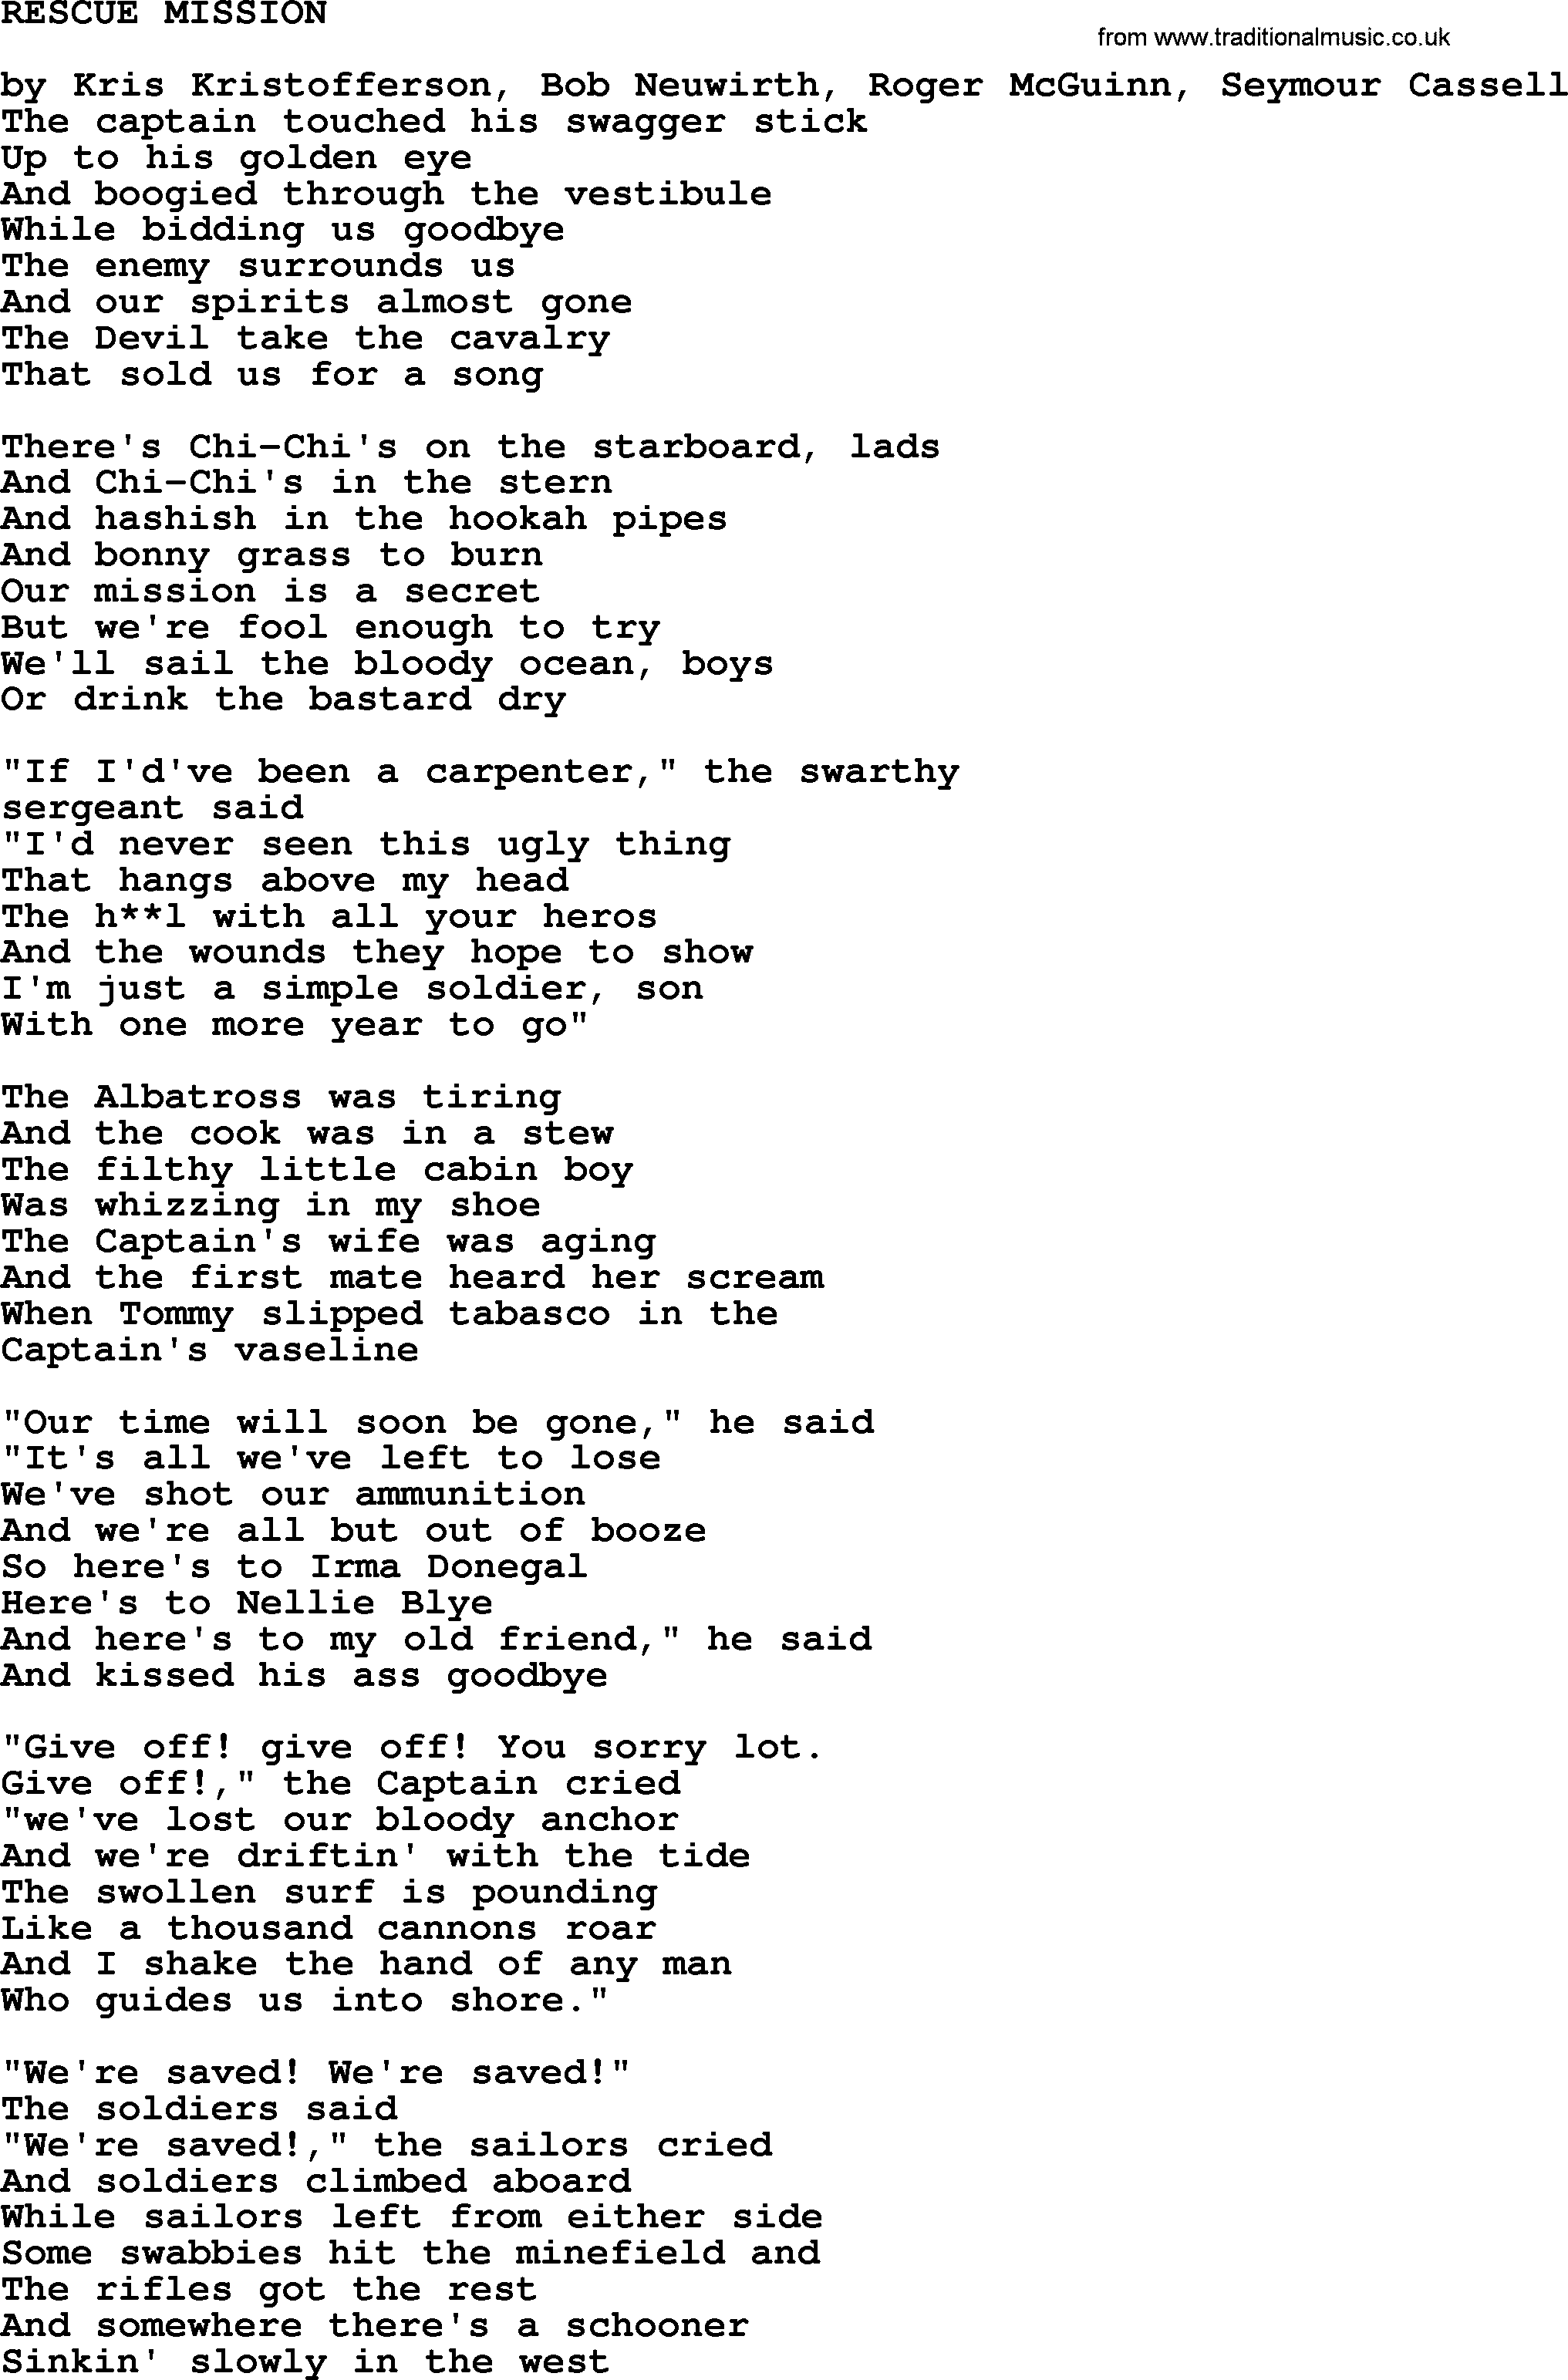 Kris Kristofferson song: Rescue Mission lyrics